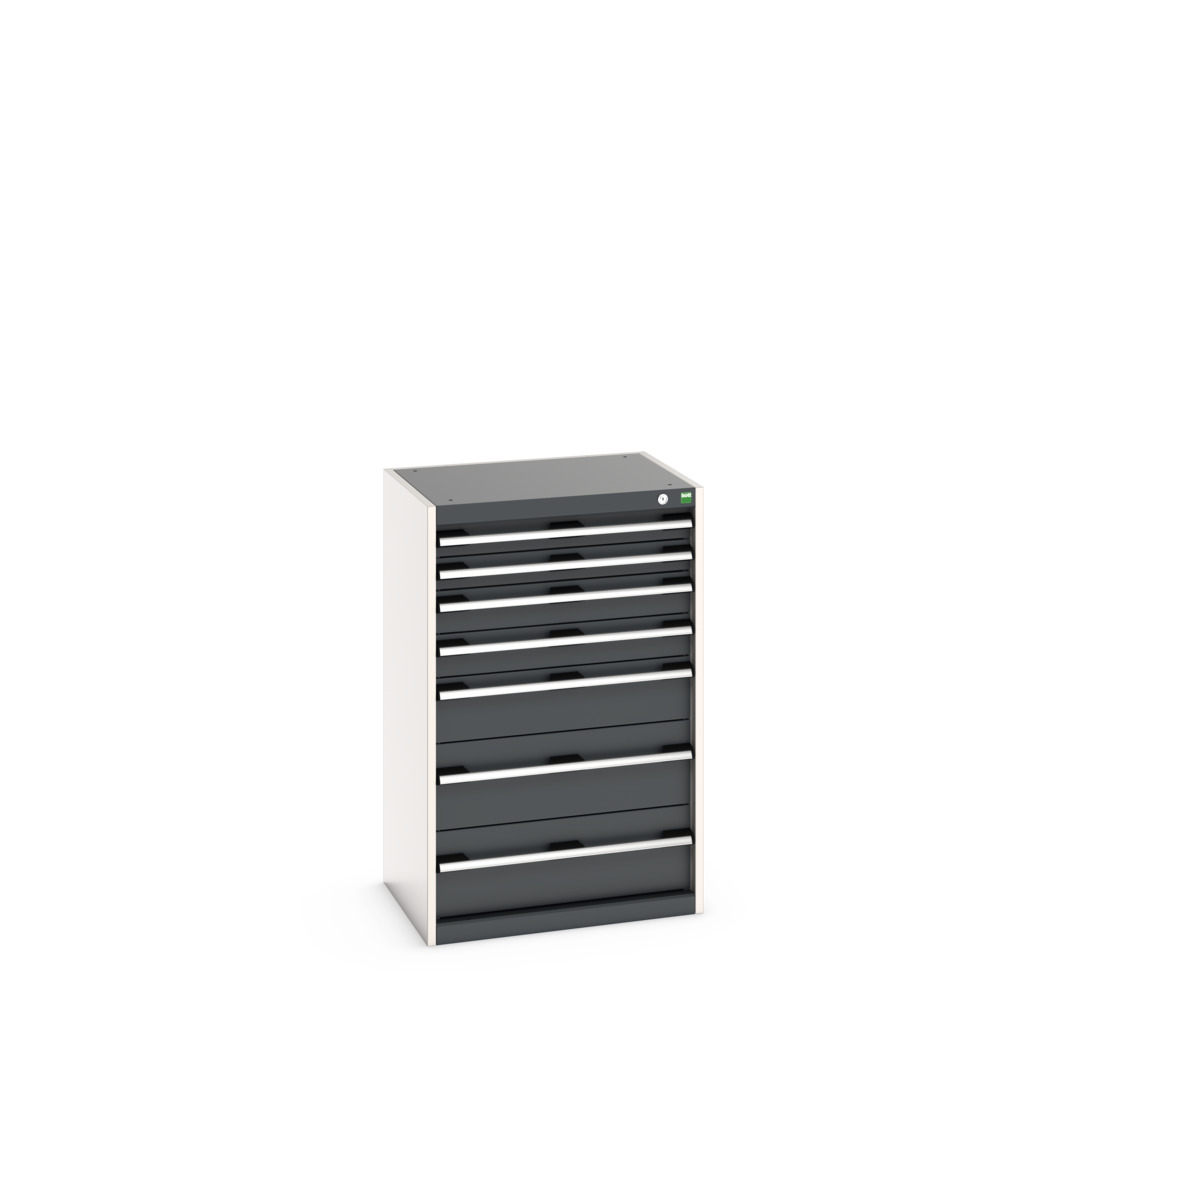 40011055. - cubio drawer cabinet